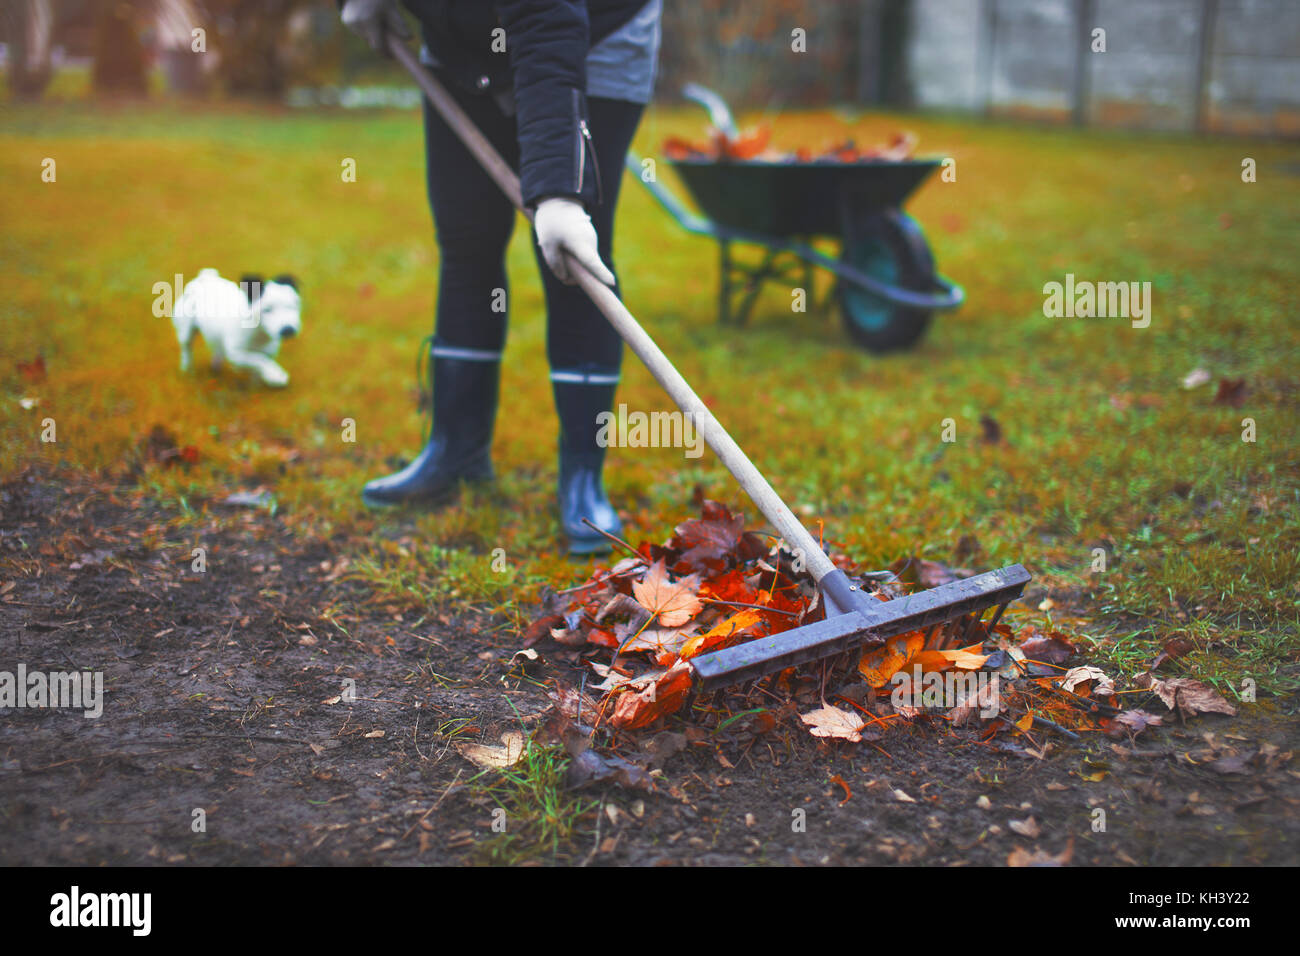 Woman raking leaves, working in garden at autumn, outdoors Stock Photo